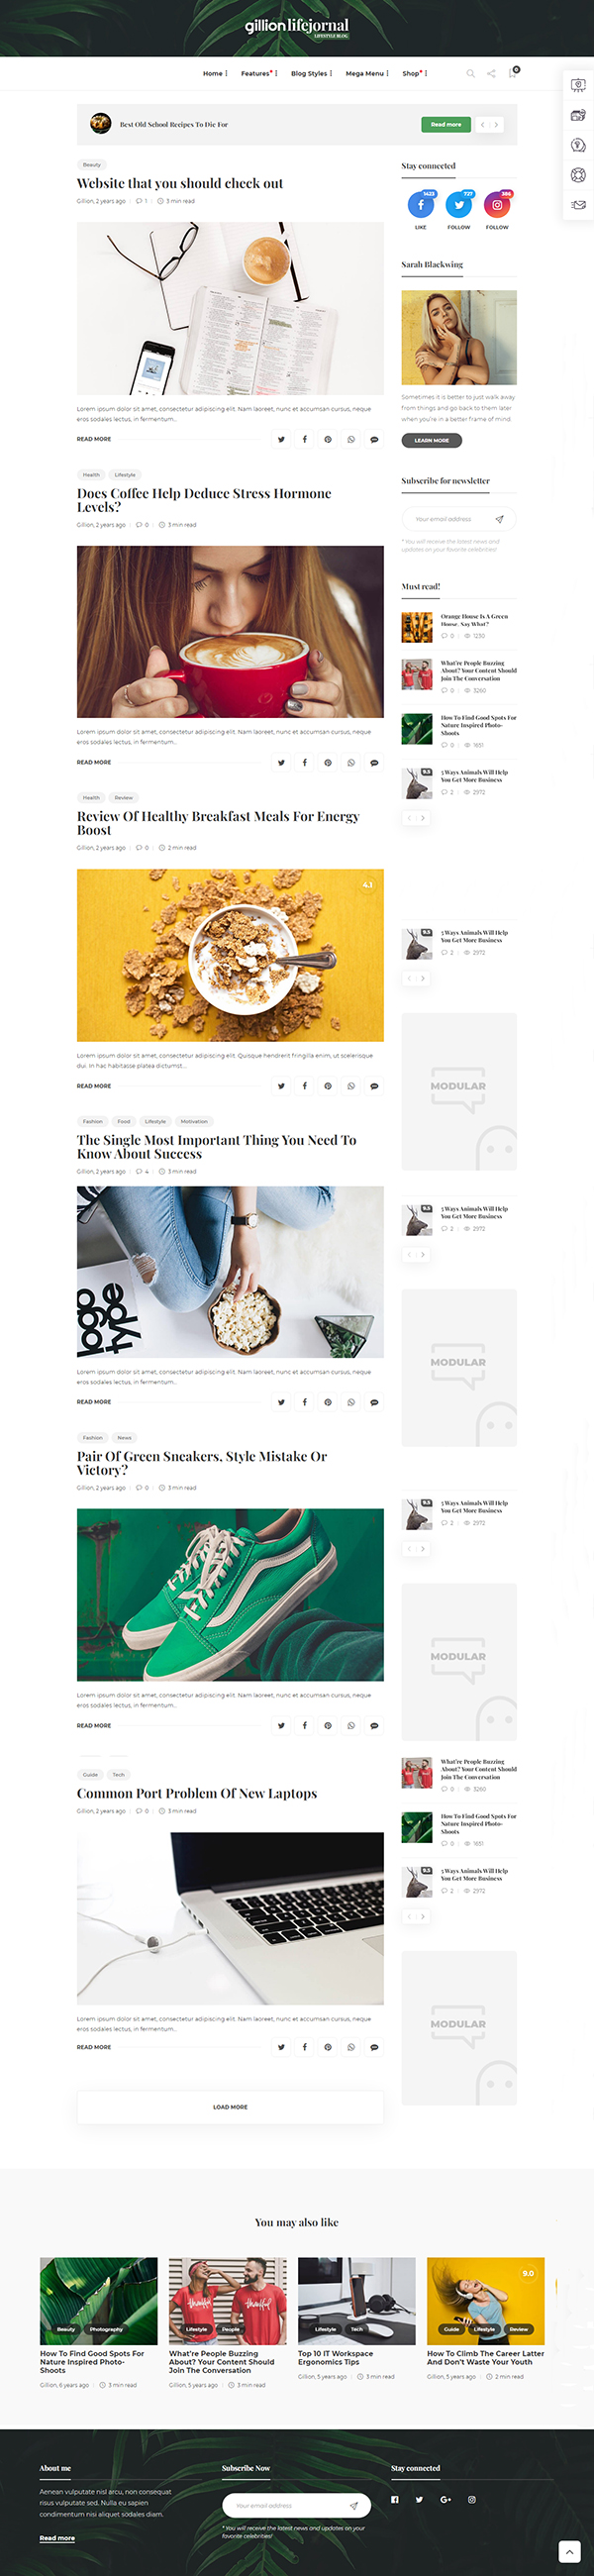 Gillion | Multi-Concept Blog / Magazine & Shop WordPress AMP Theme